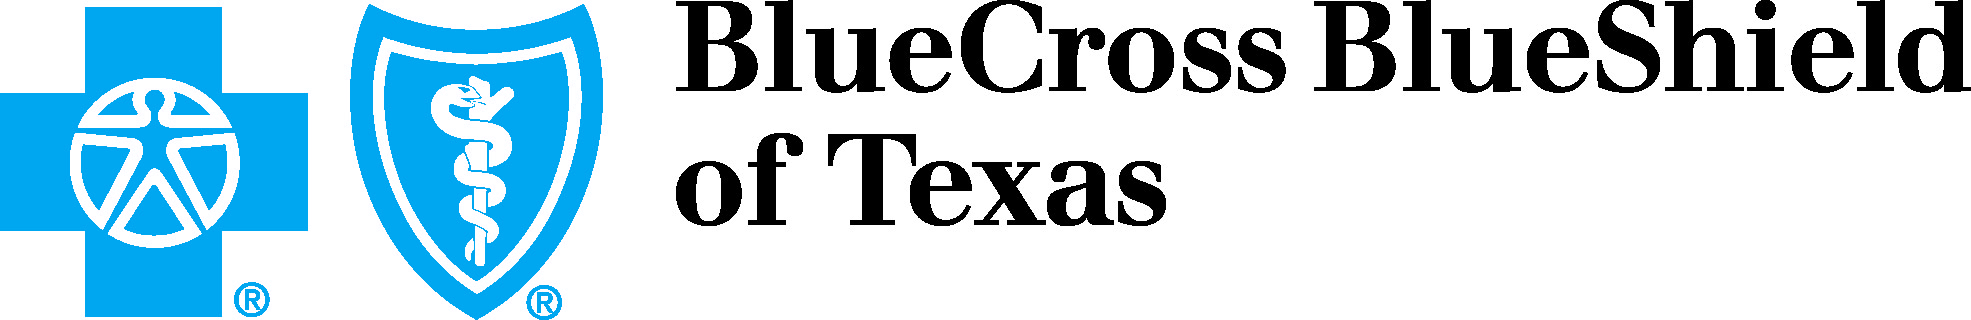 BCBS of Texas logo